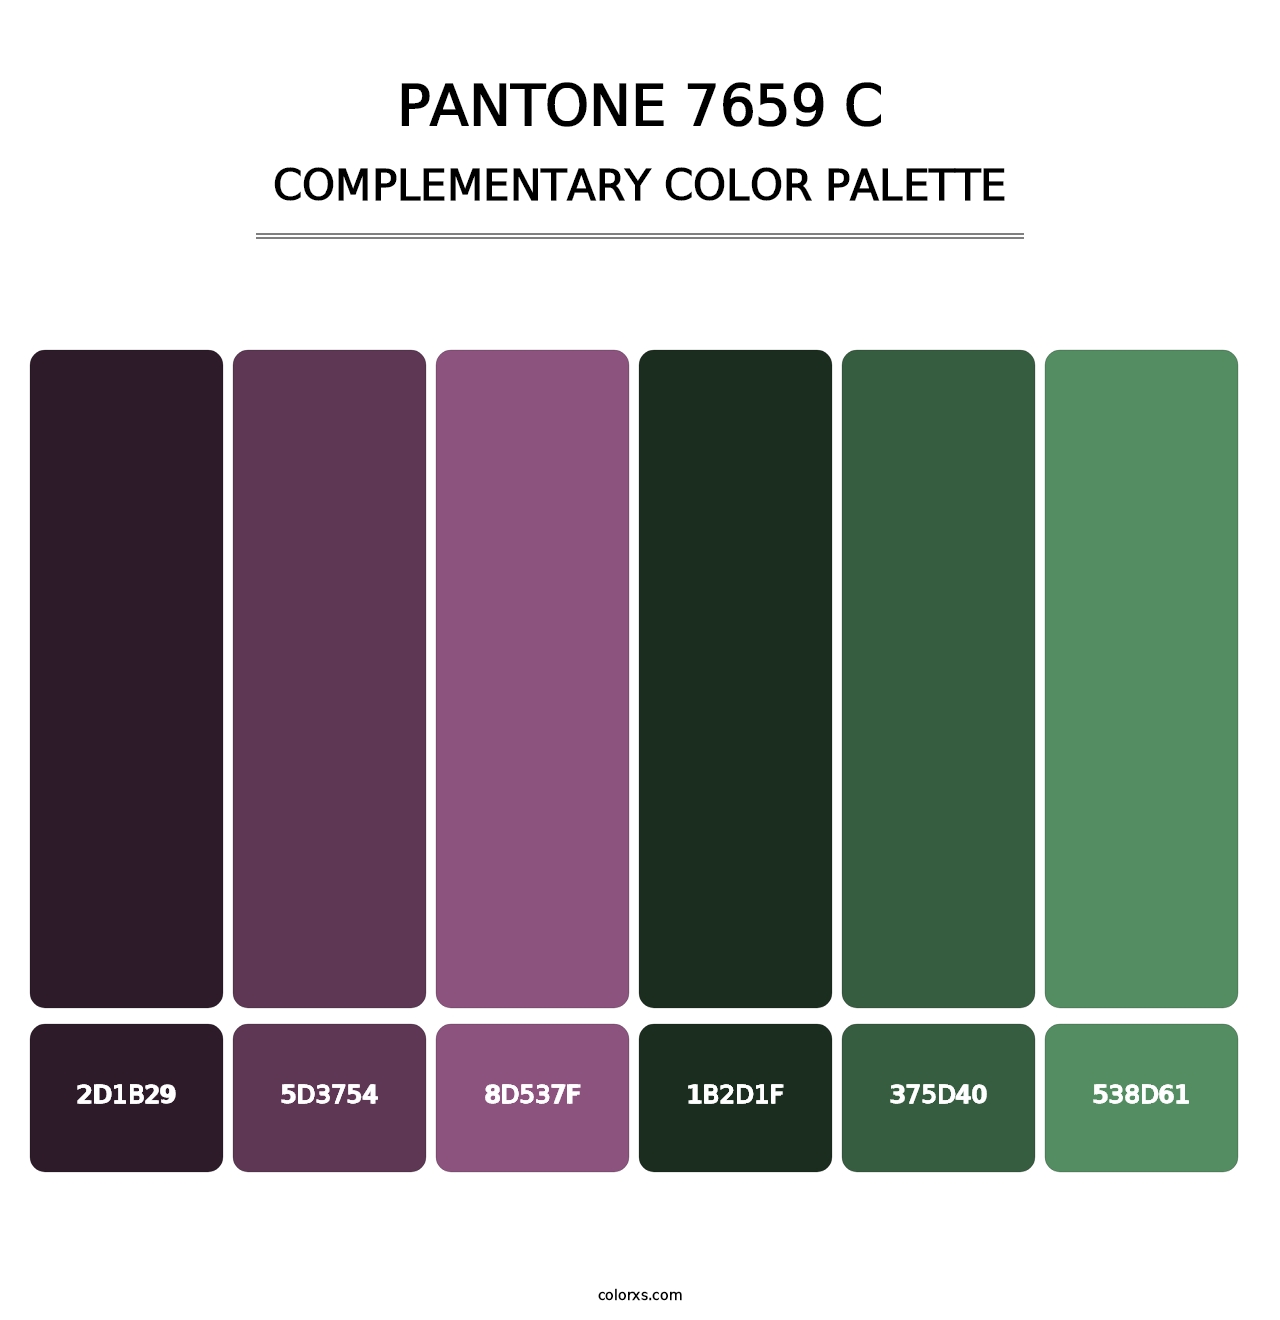 PANTONE 7659 C - Complementary Color Palette